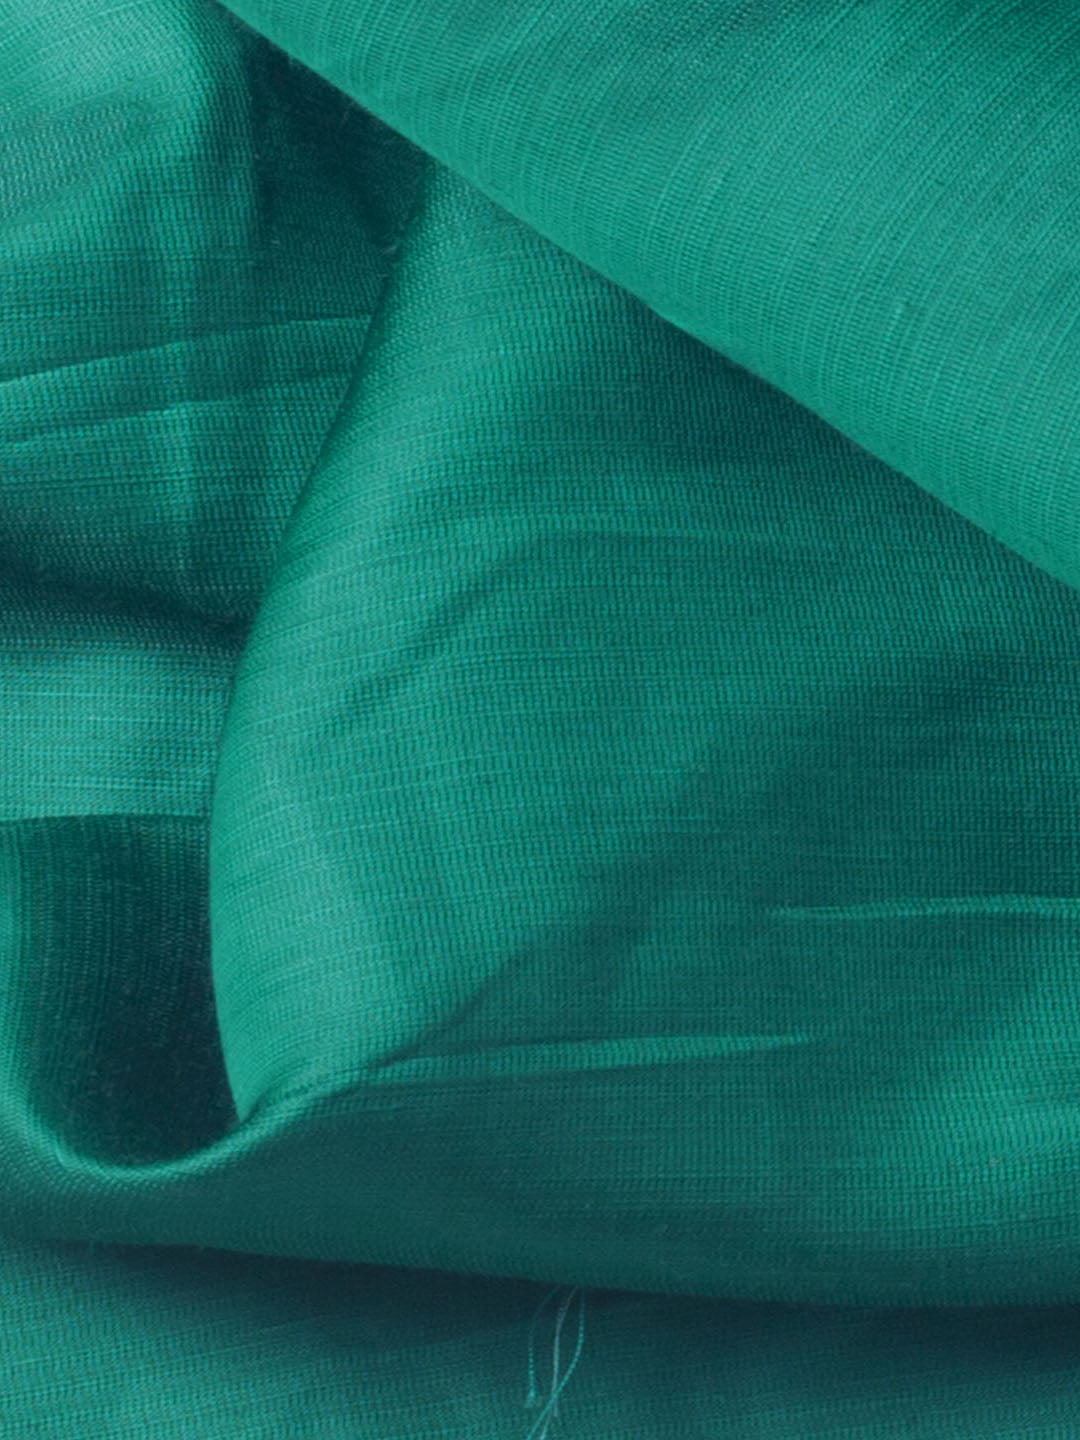 Dark Green Linen Satin Fabric